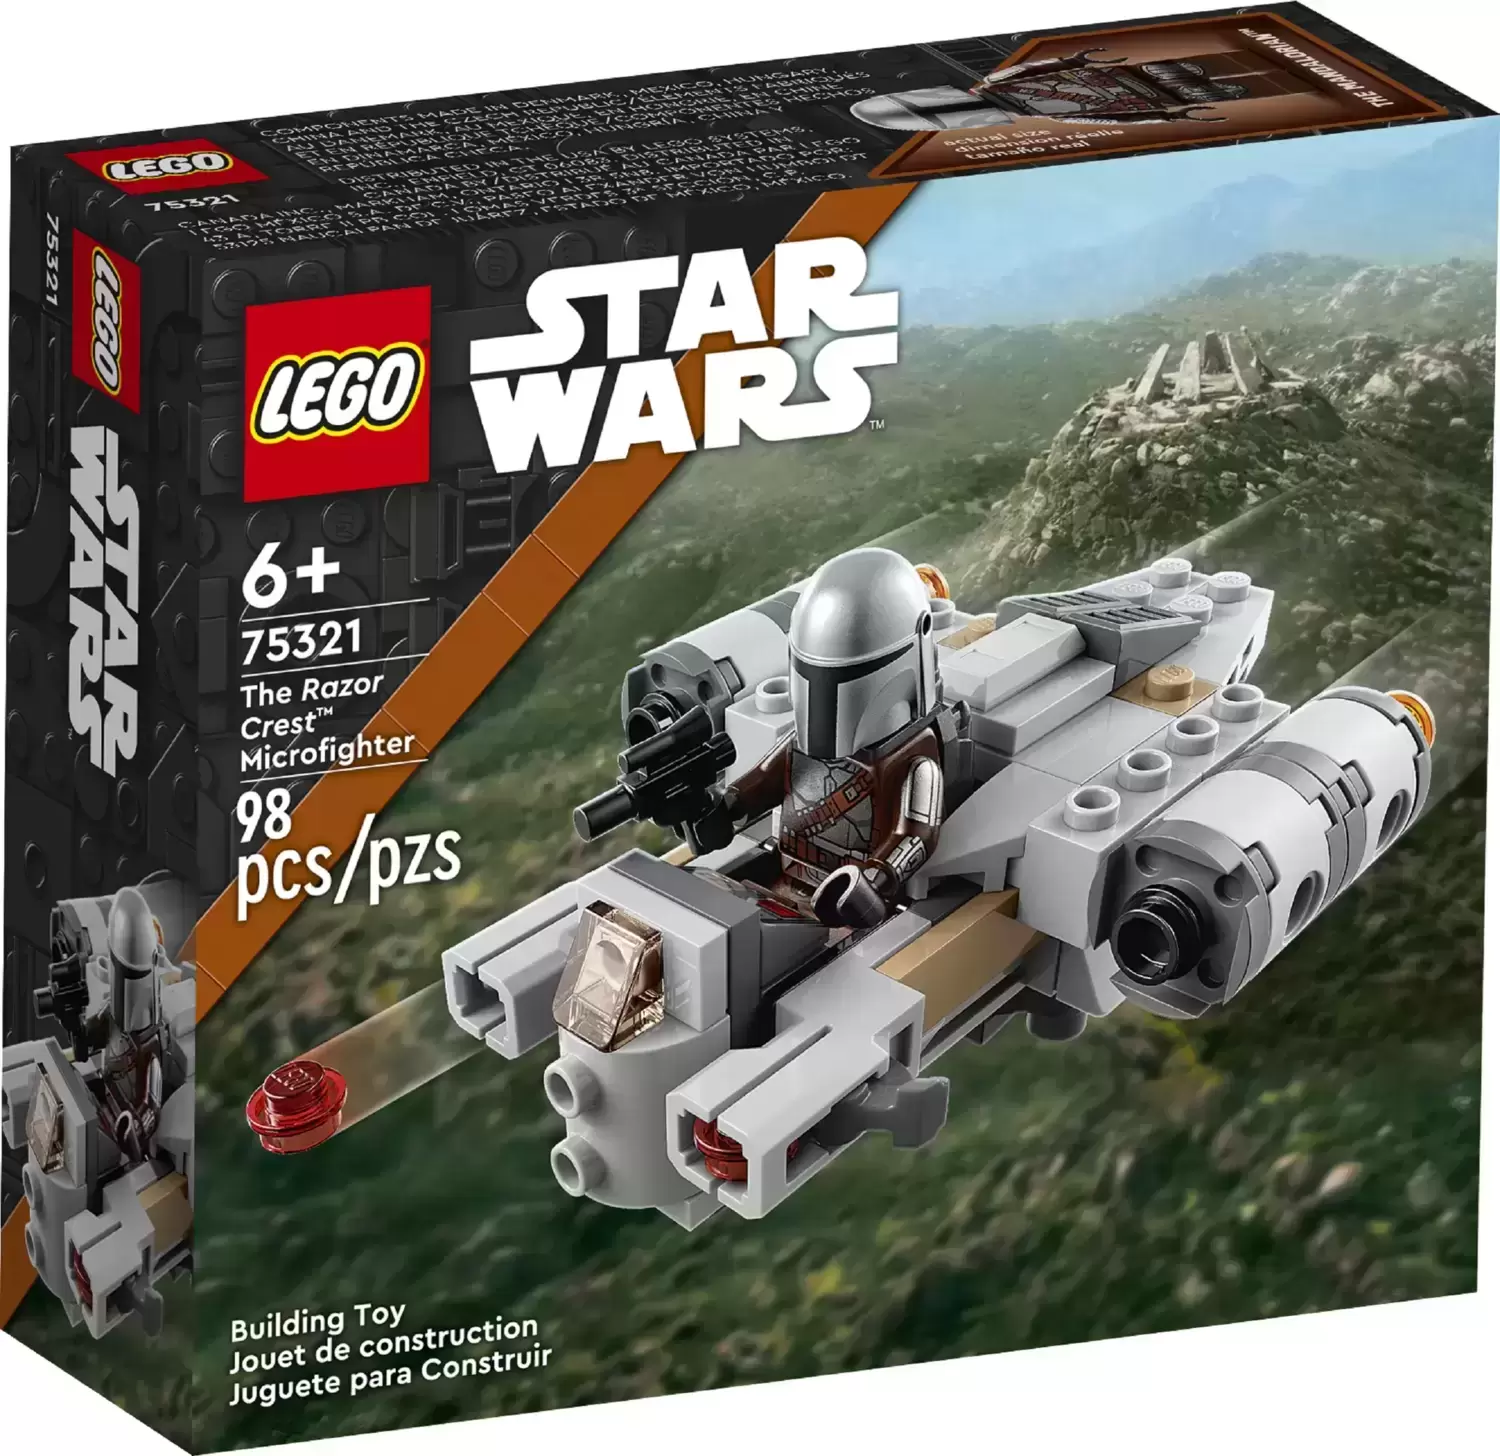 LEGO Star Wars - The Razor Crest - Microfighter